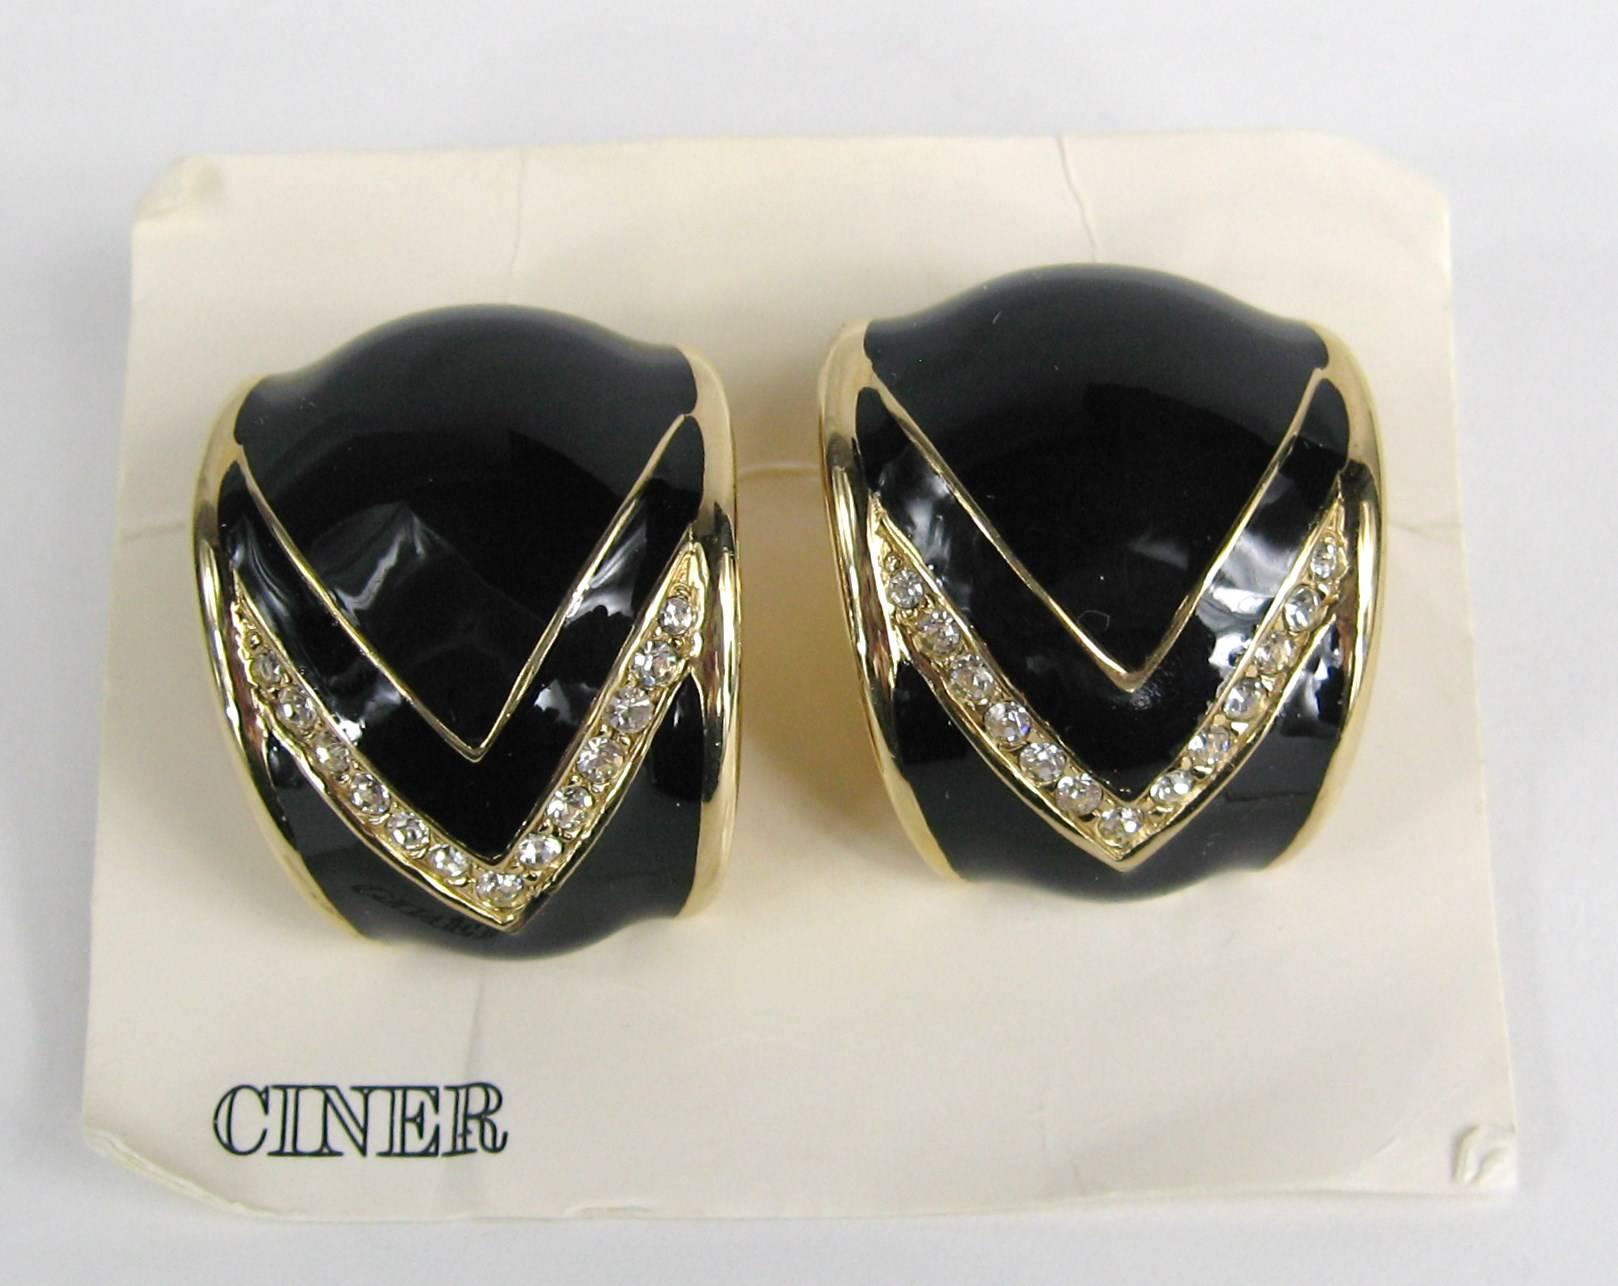 Vintage Ciner Gilt Gold Black Enamel Crystal Earrings 1980s 
Still on earring card 
Black Enamel with swarovski Crystals 
Measuring 1.20